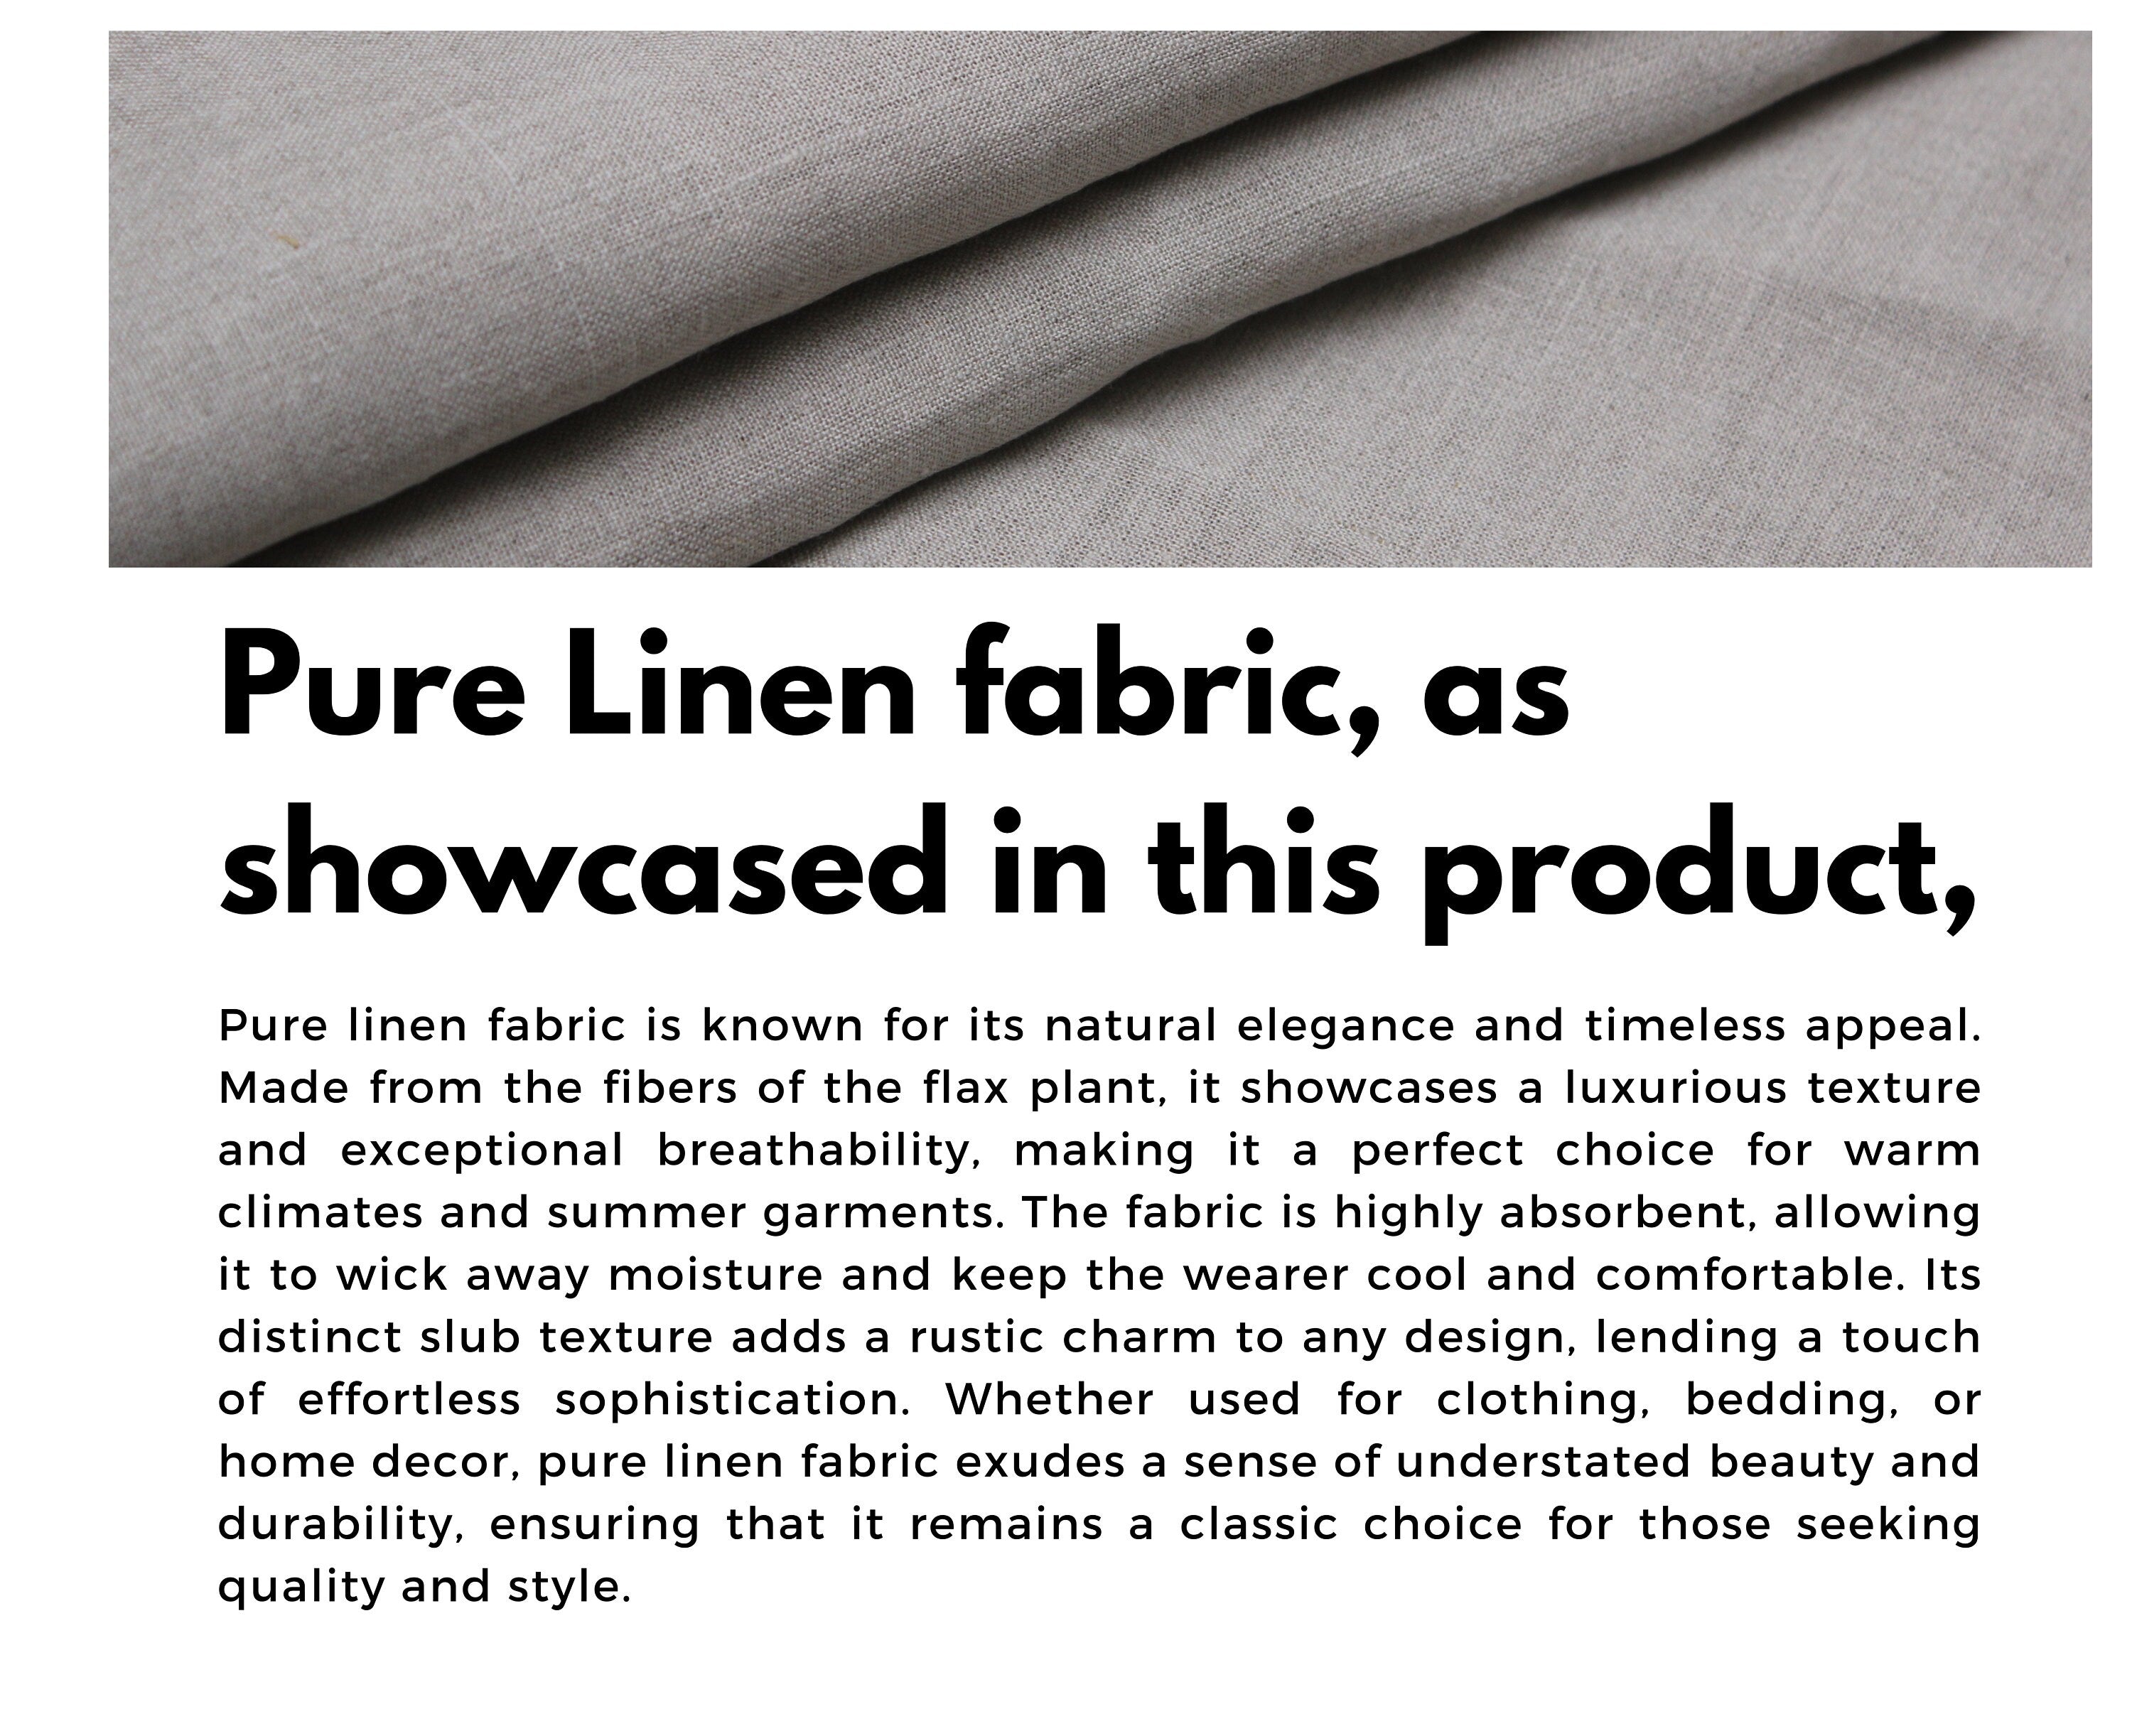 Linen fabric, cushion cover, curtains, floral block print, handmade art, pure linen 58" wide, lampshade - AMRITVELA